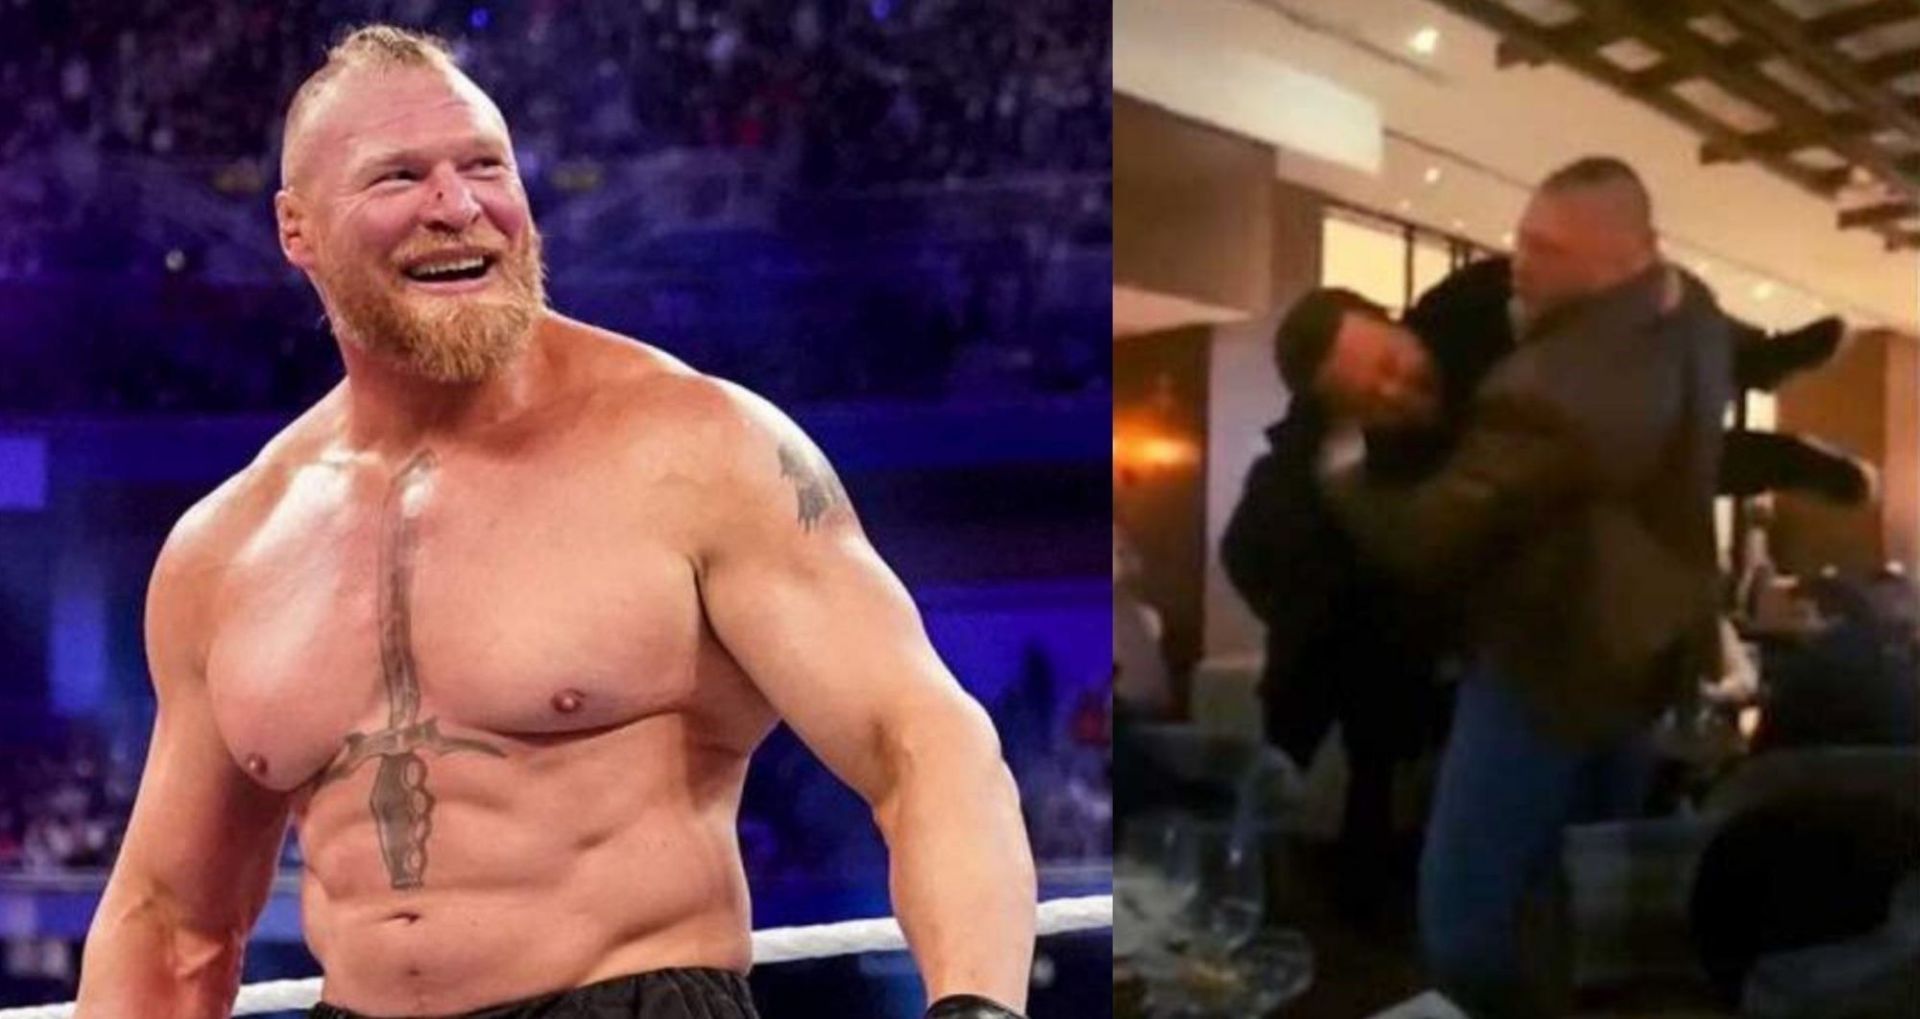 Brock Lesnar bodyslammed Wee Man through a table at a Four Seasons